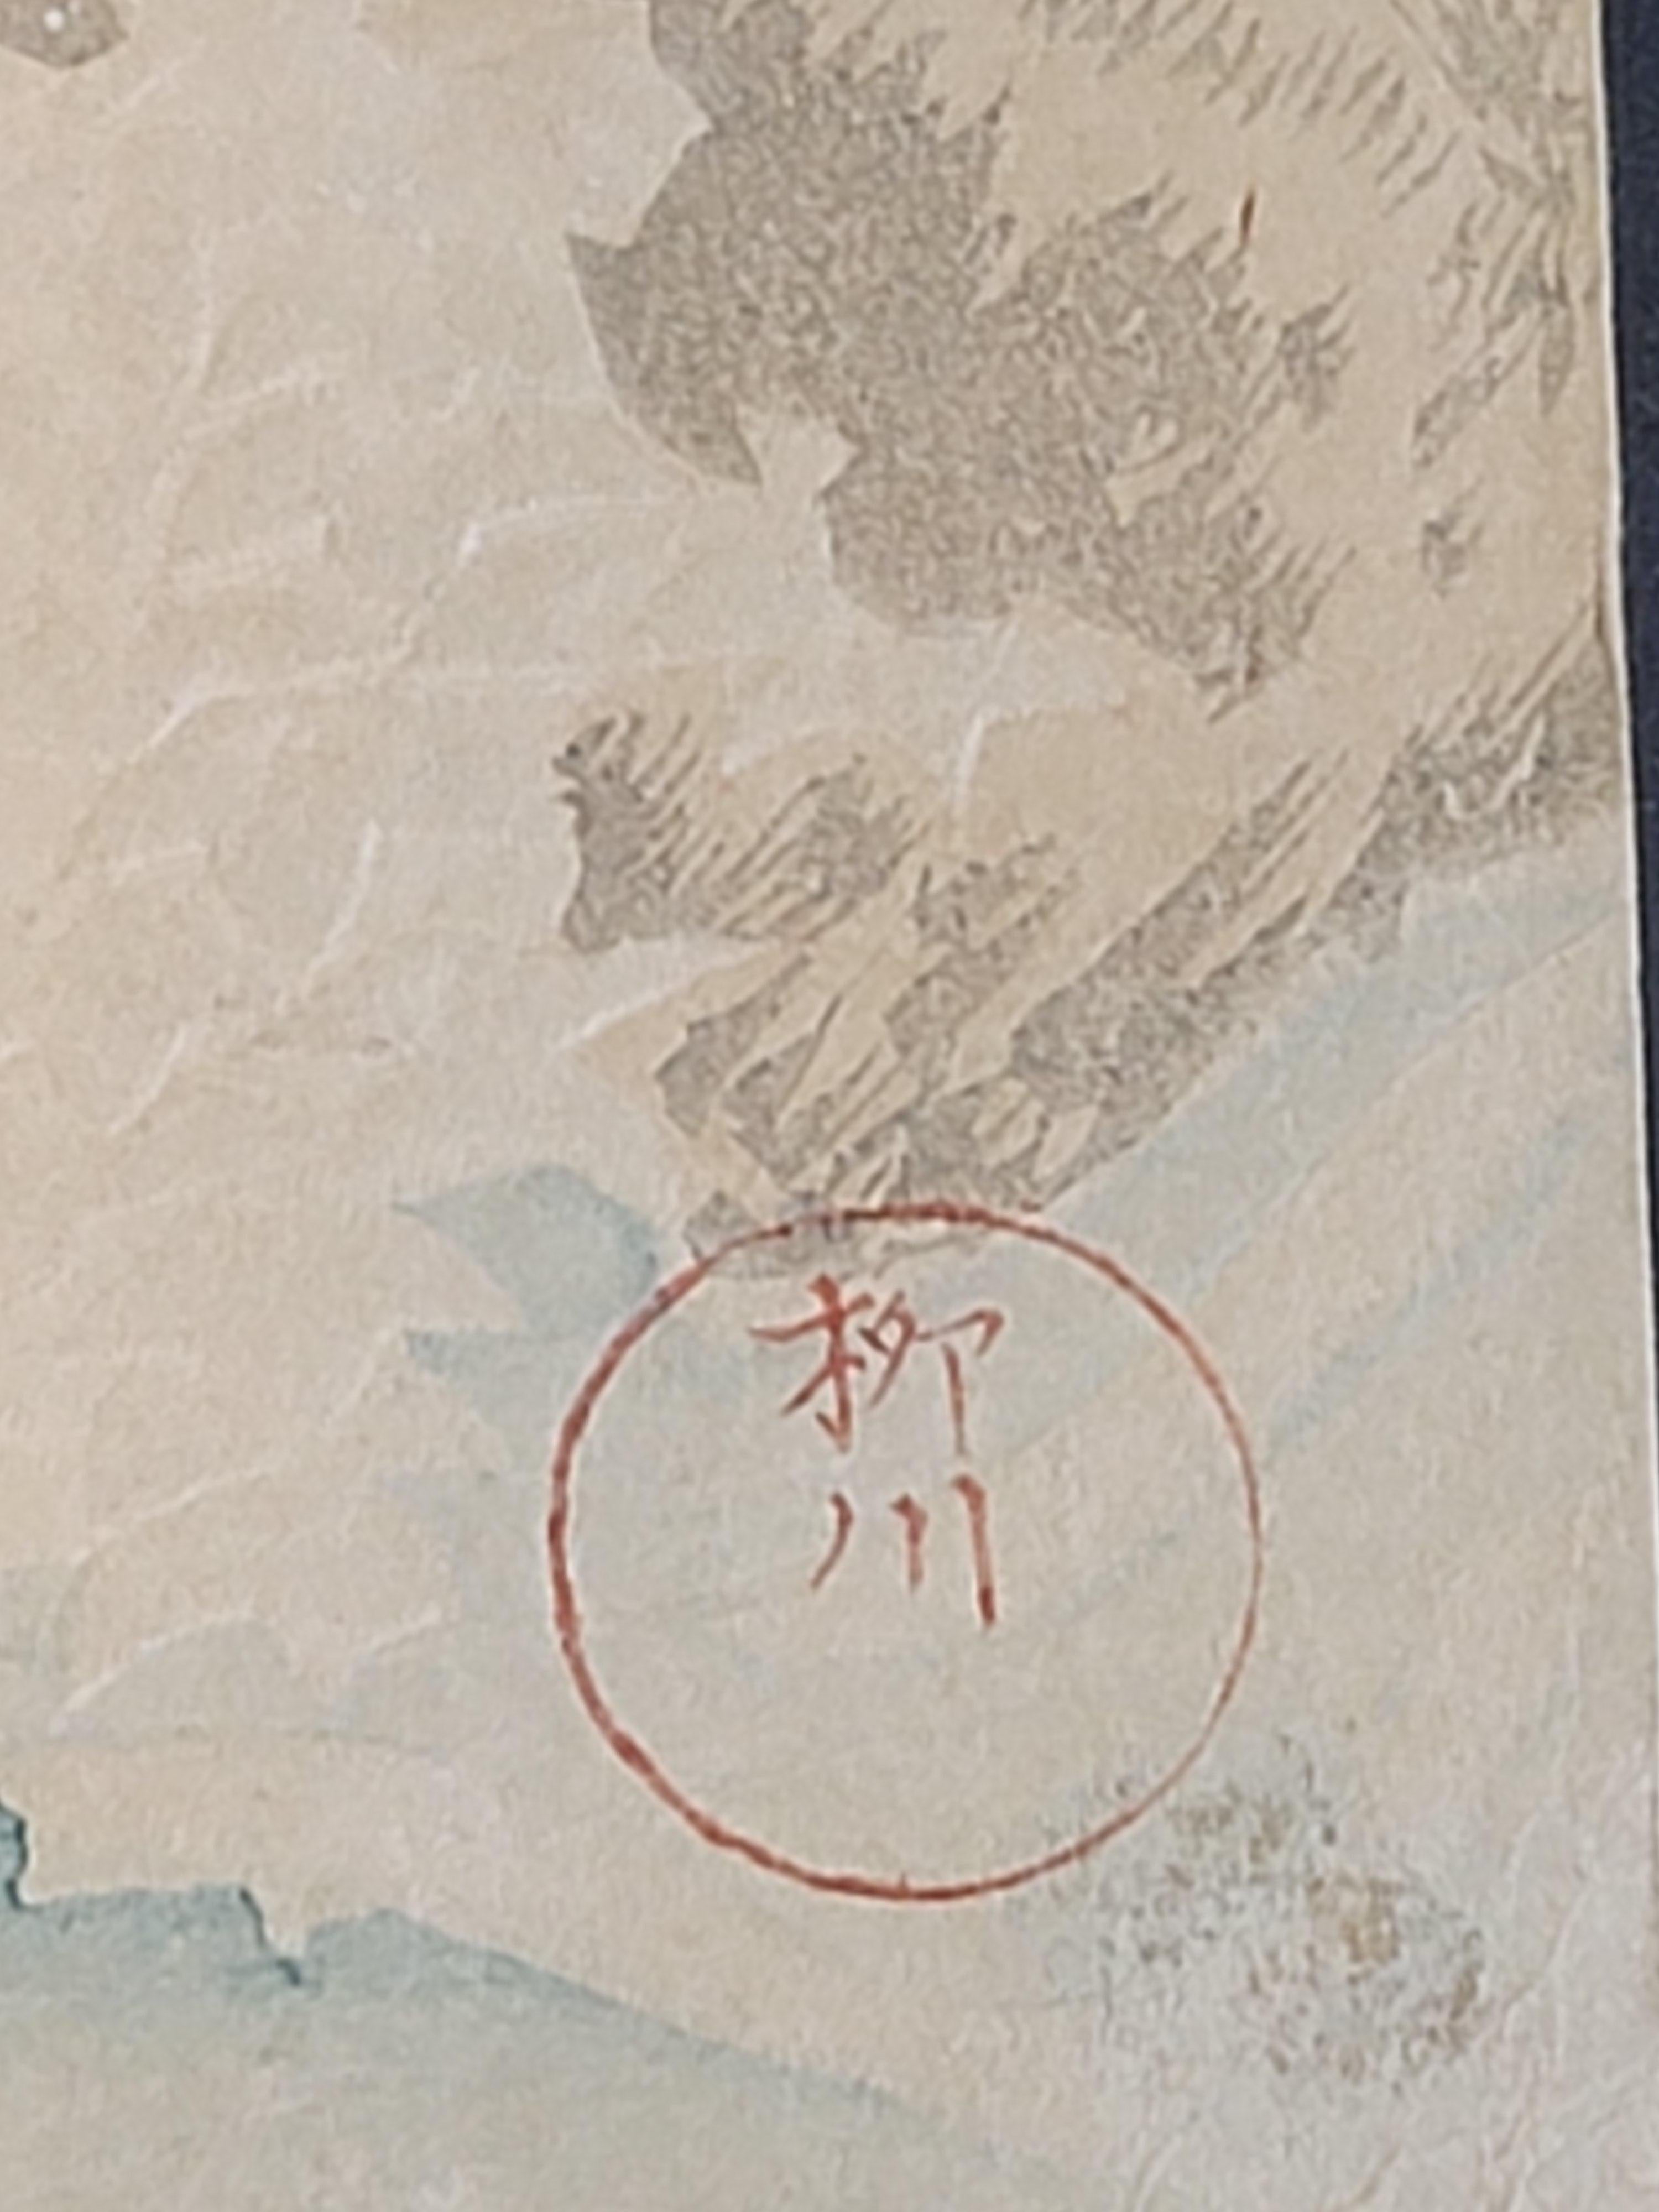 Paper Japanese Woodblock Print by Yanagawa Shigenobu 柳川重信 '1787-1832' For Sale